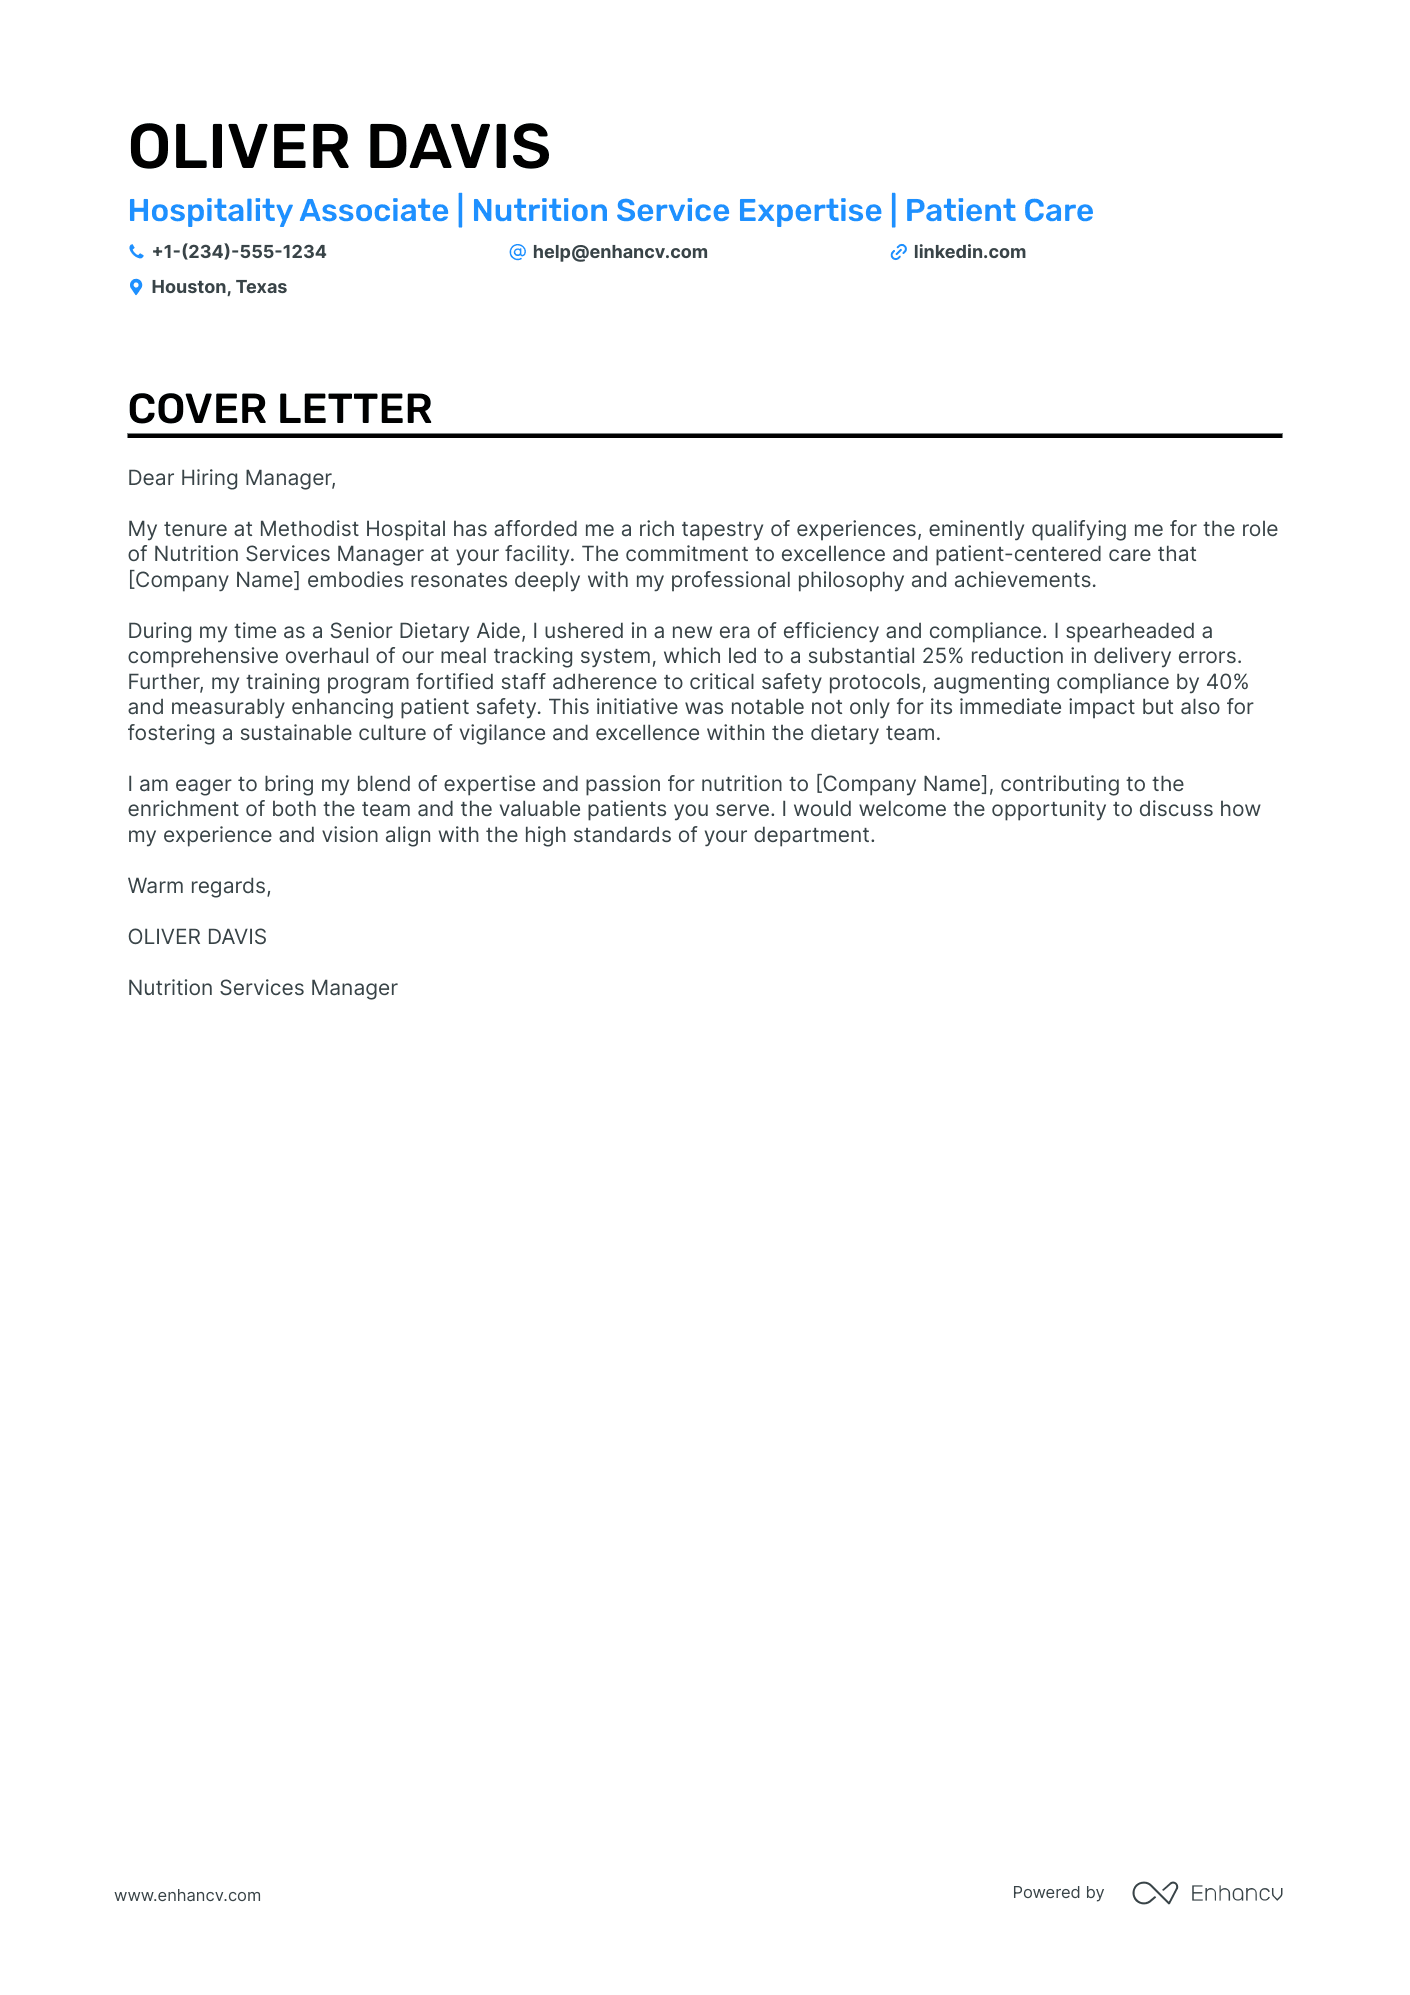 Hospitality cover letter